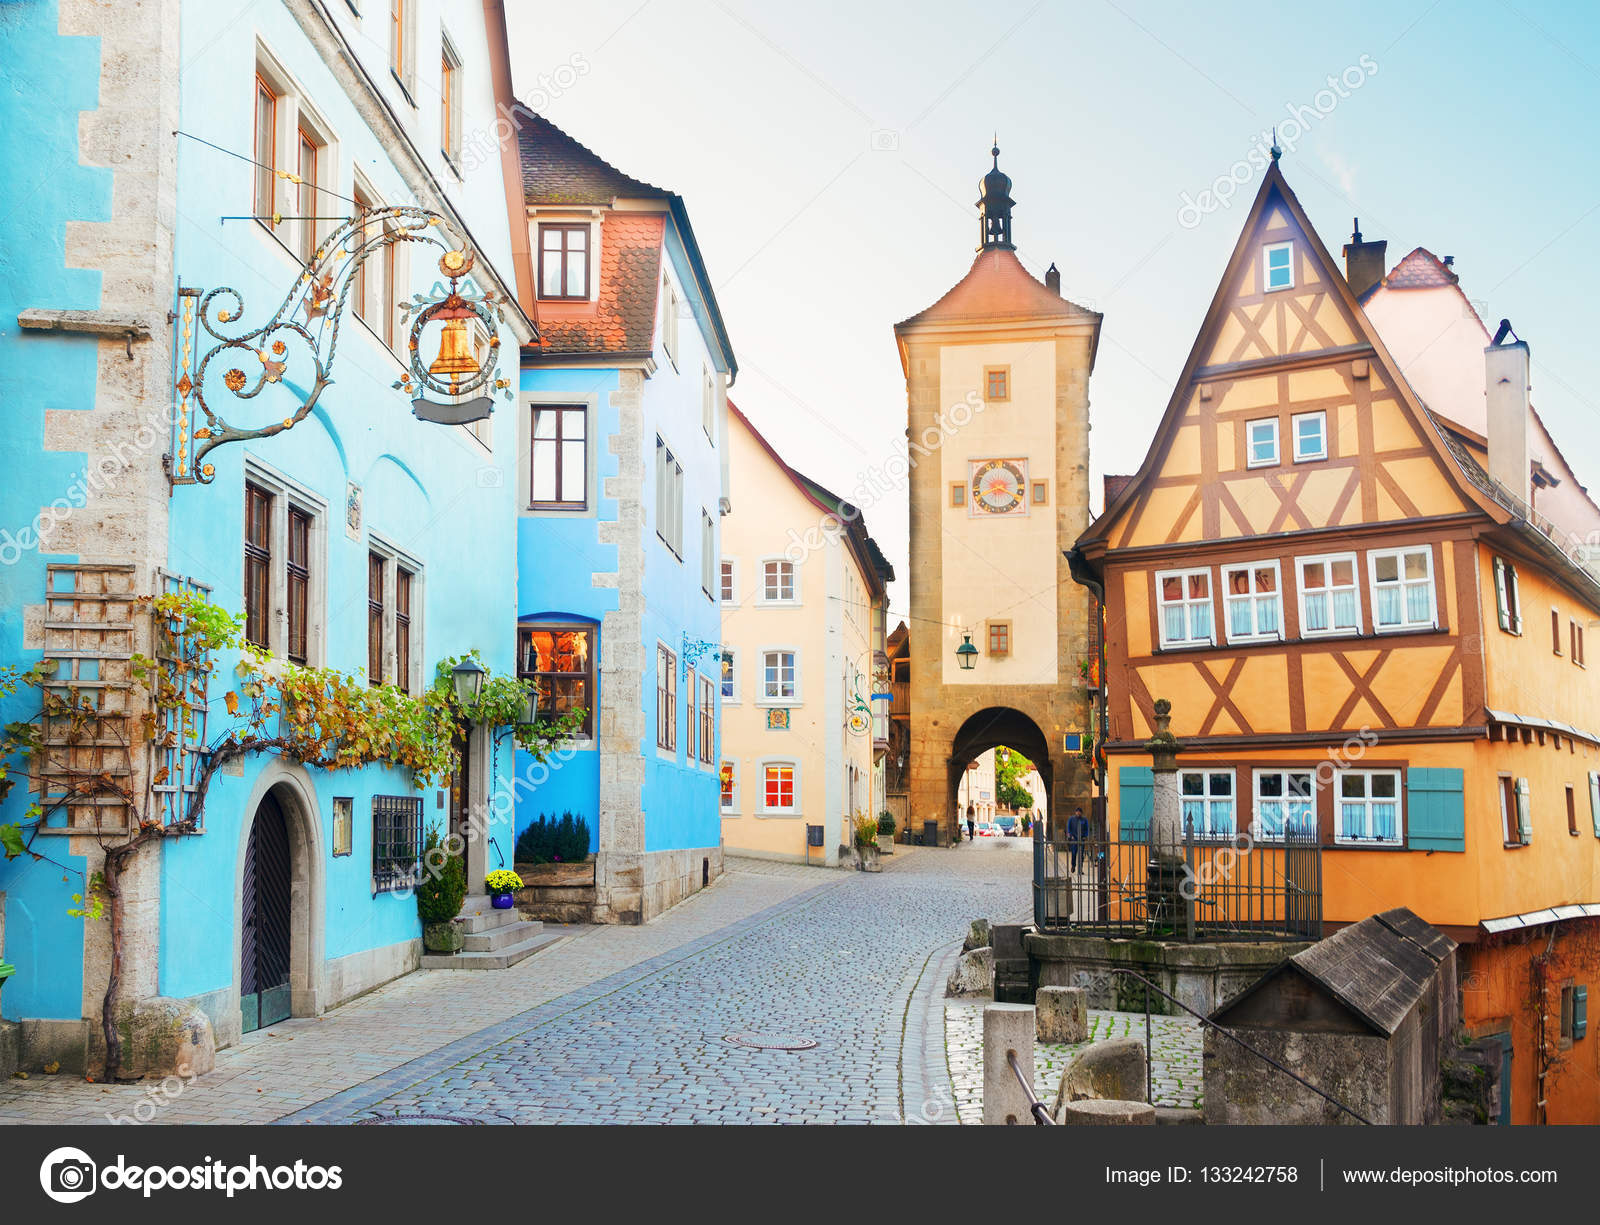 Rothenburg ob der Tauber, Germany — Stock Photo © Neirfys #133242758